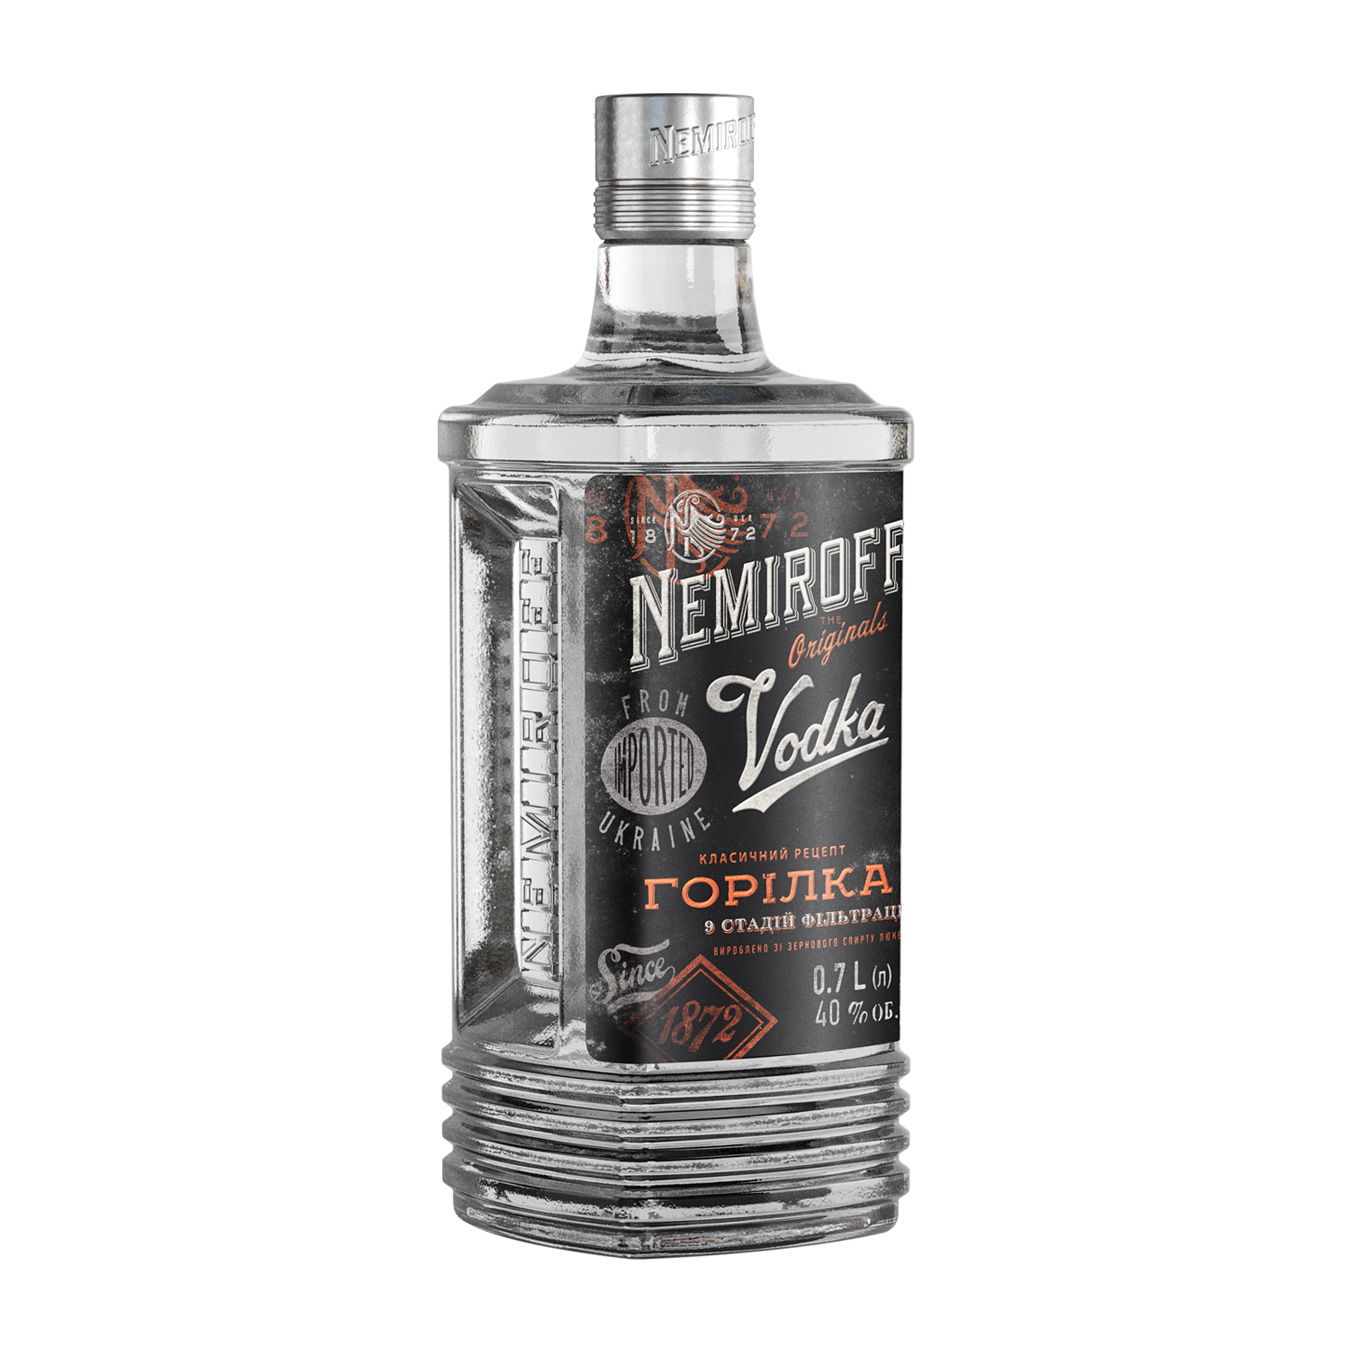 Vodka Nemiroff Original 40% 0,7l 2